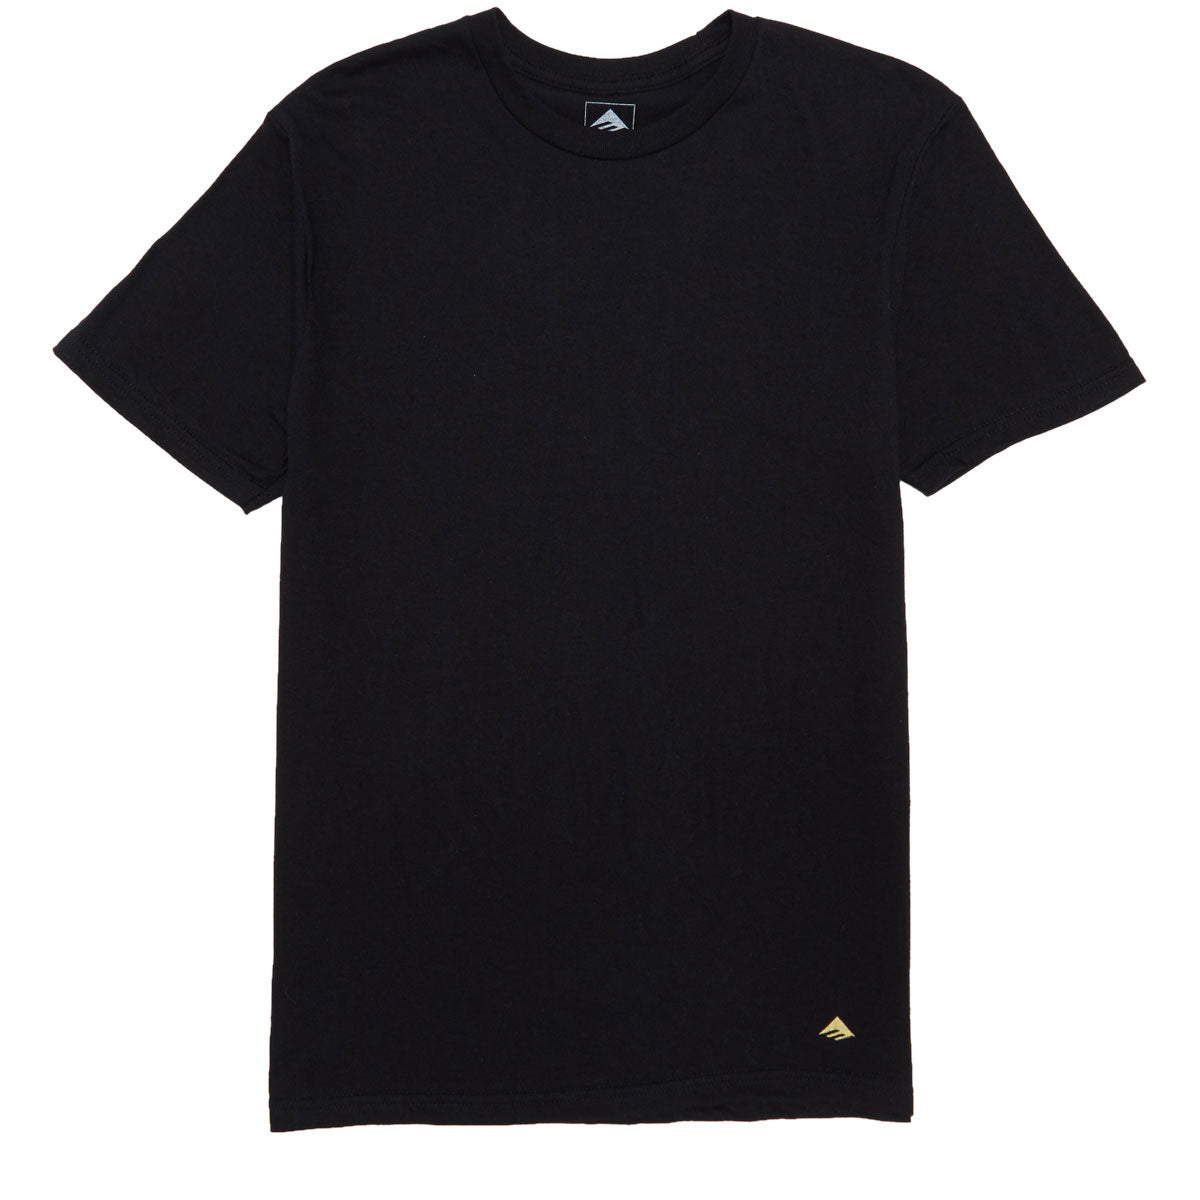 Emerica Micro Triangle T-Shirt - Black image 1